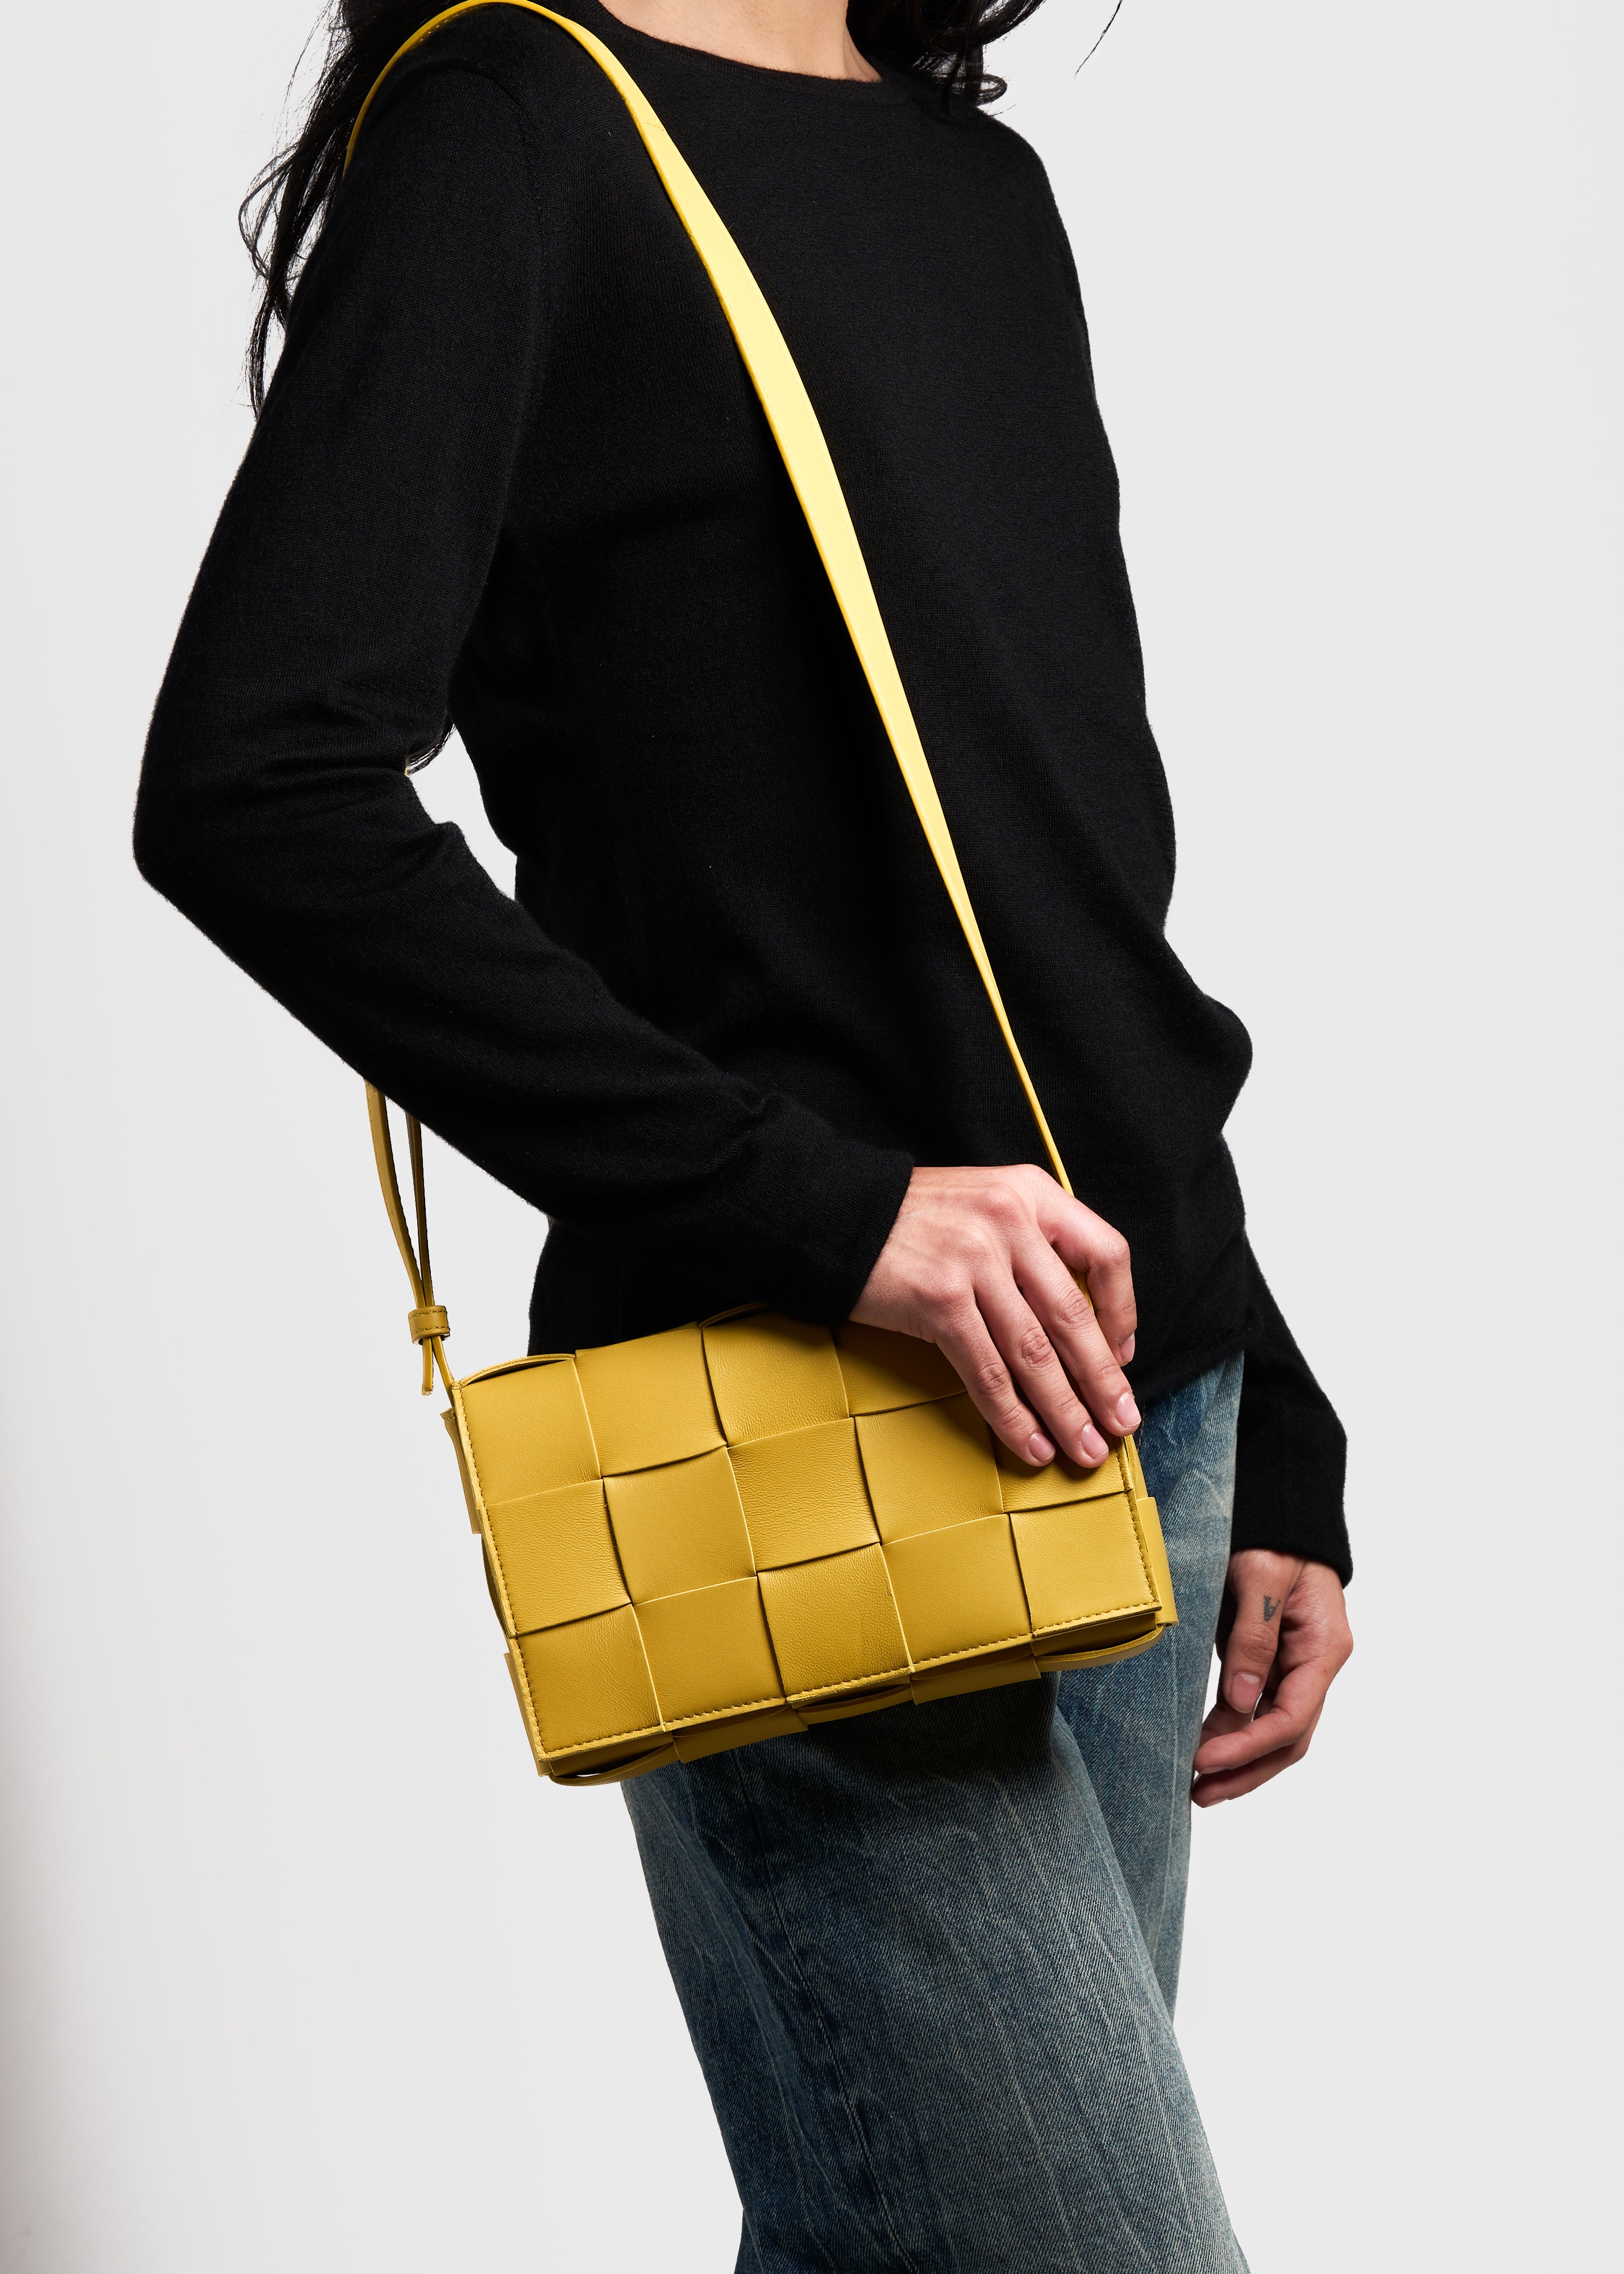 Bottega Veneta Brick Intrecciato Leather Shoulder Bag White Gold